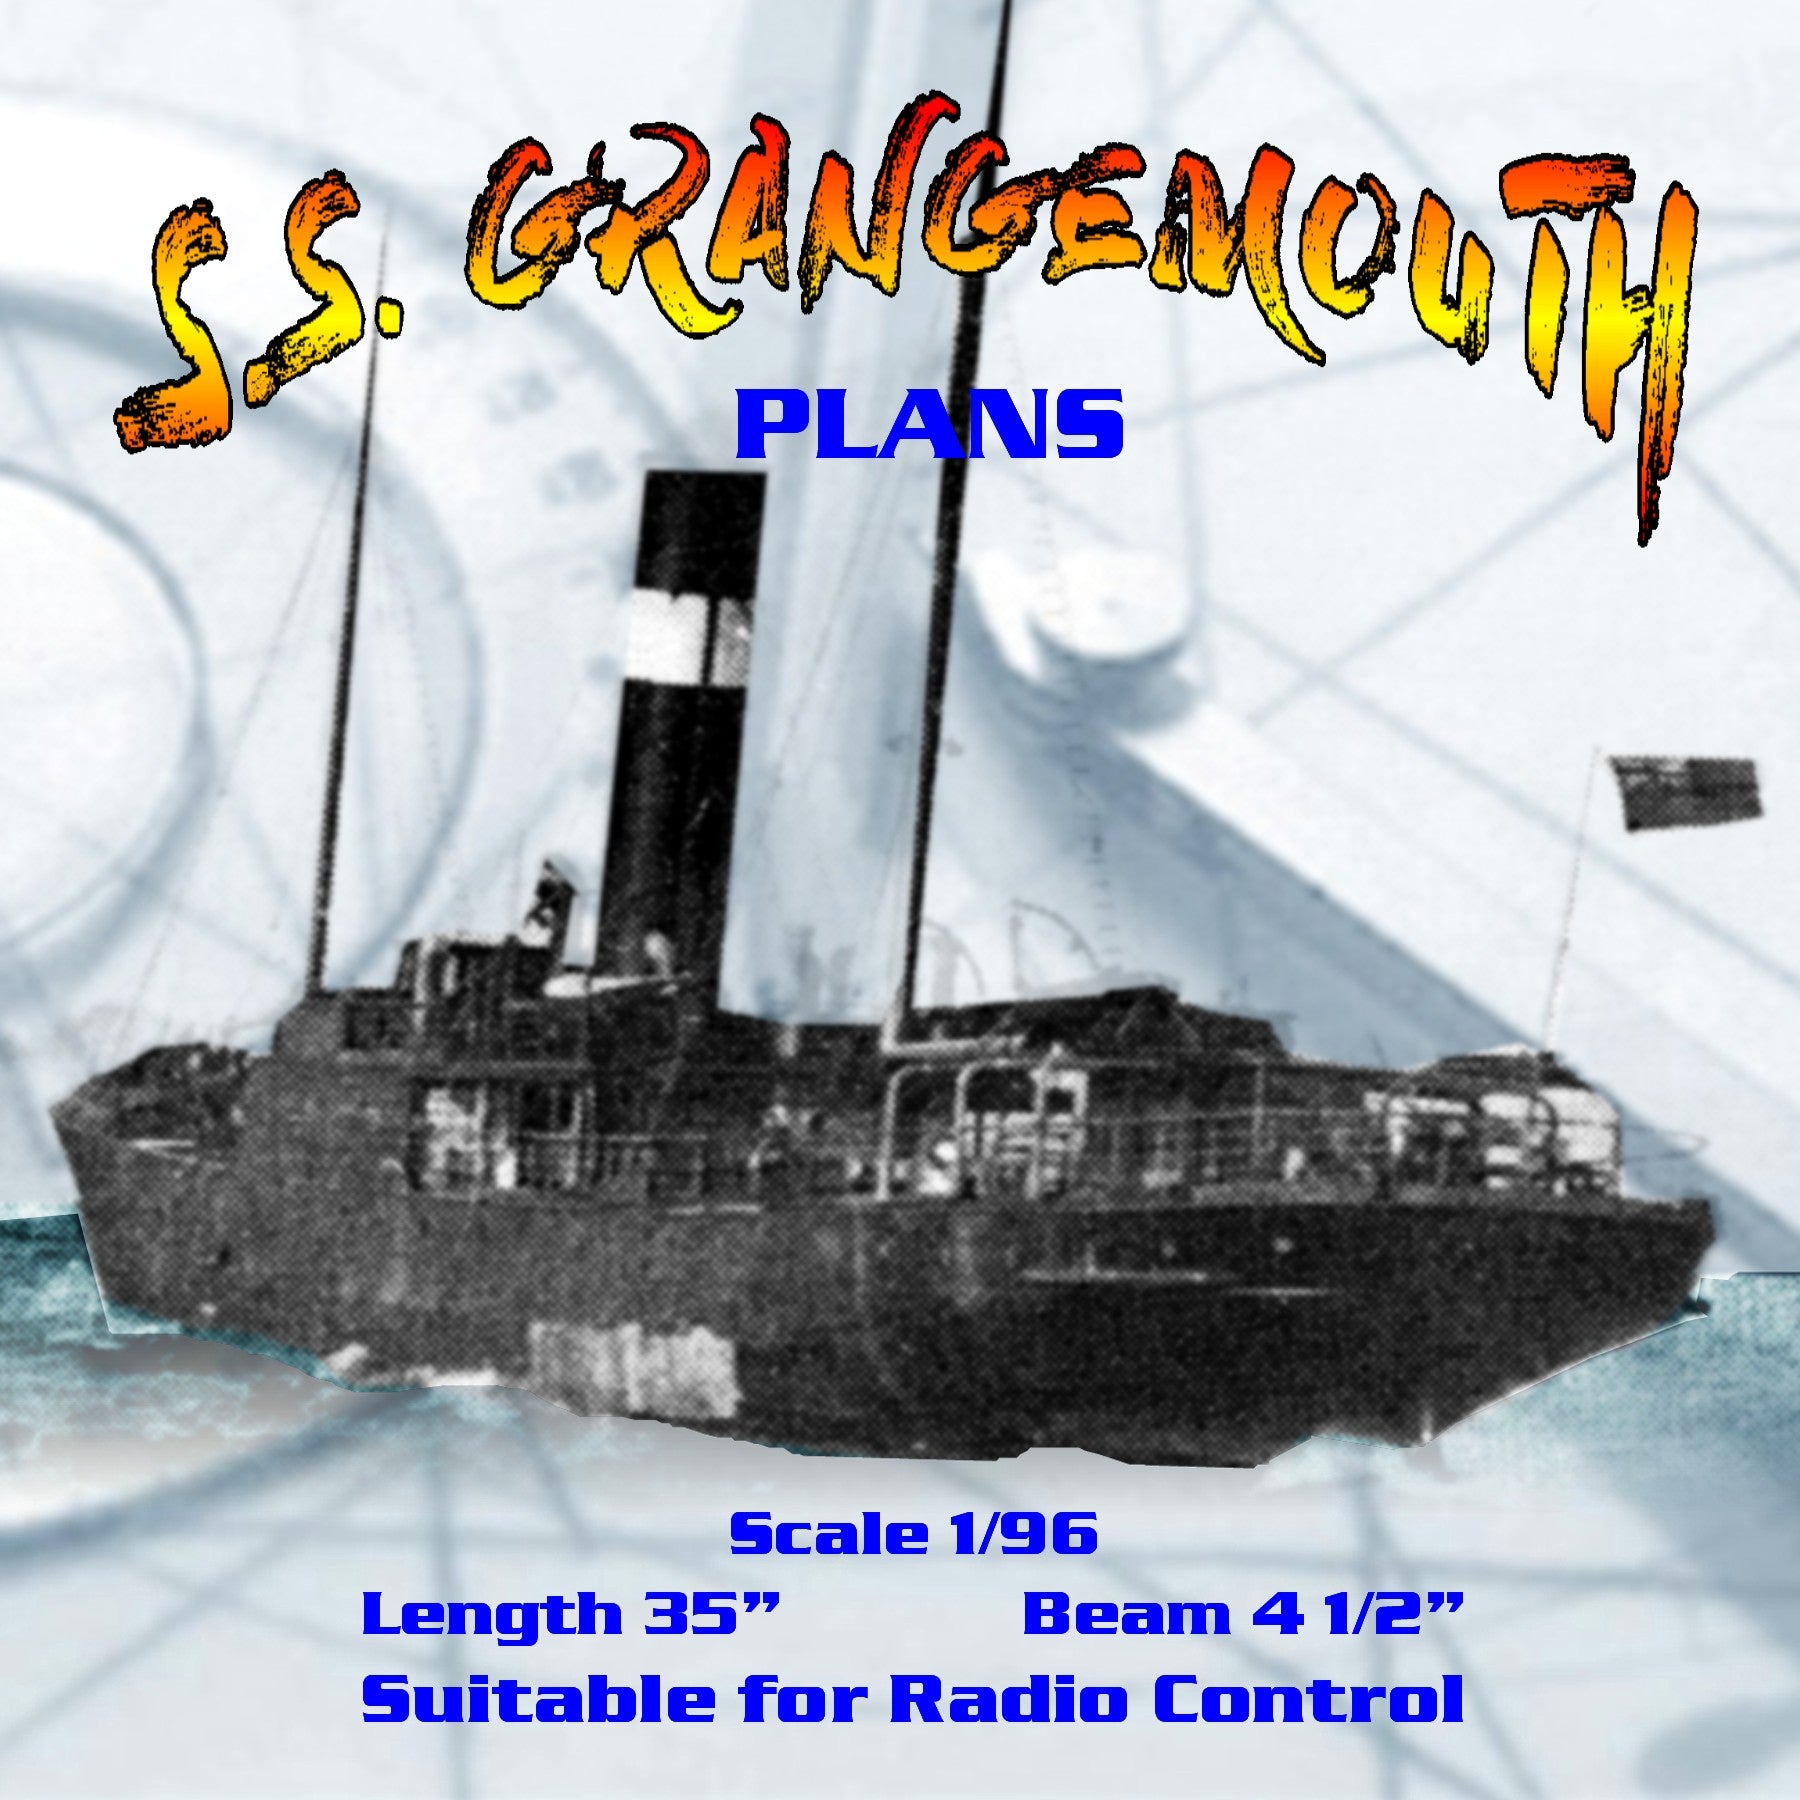 full size printed plan scale 1/96 short sea voyage passenger/cargo carrier “s.s. grangemouth”